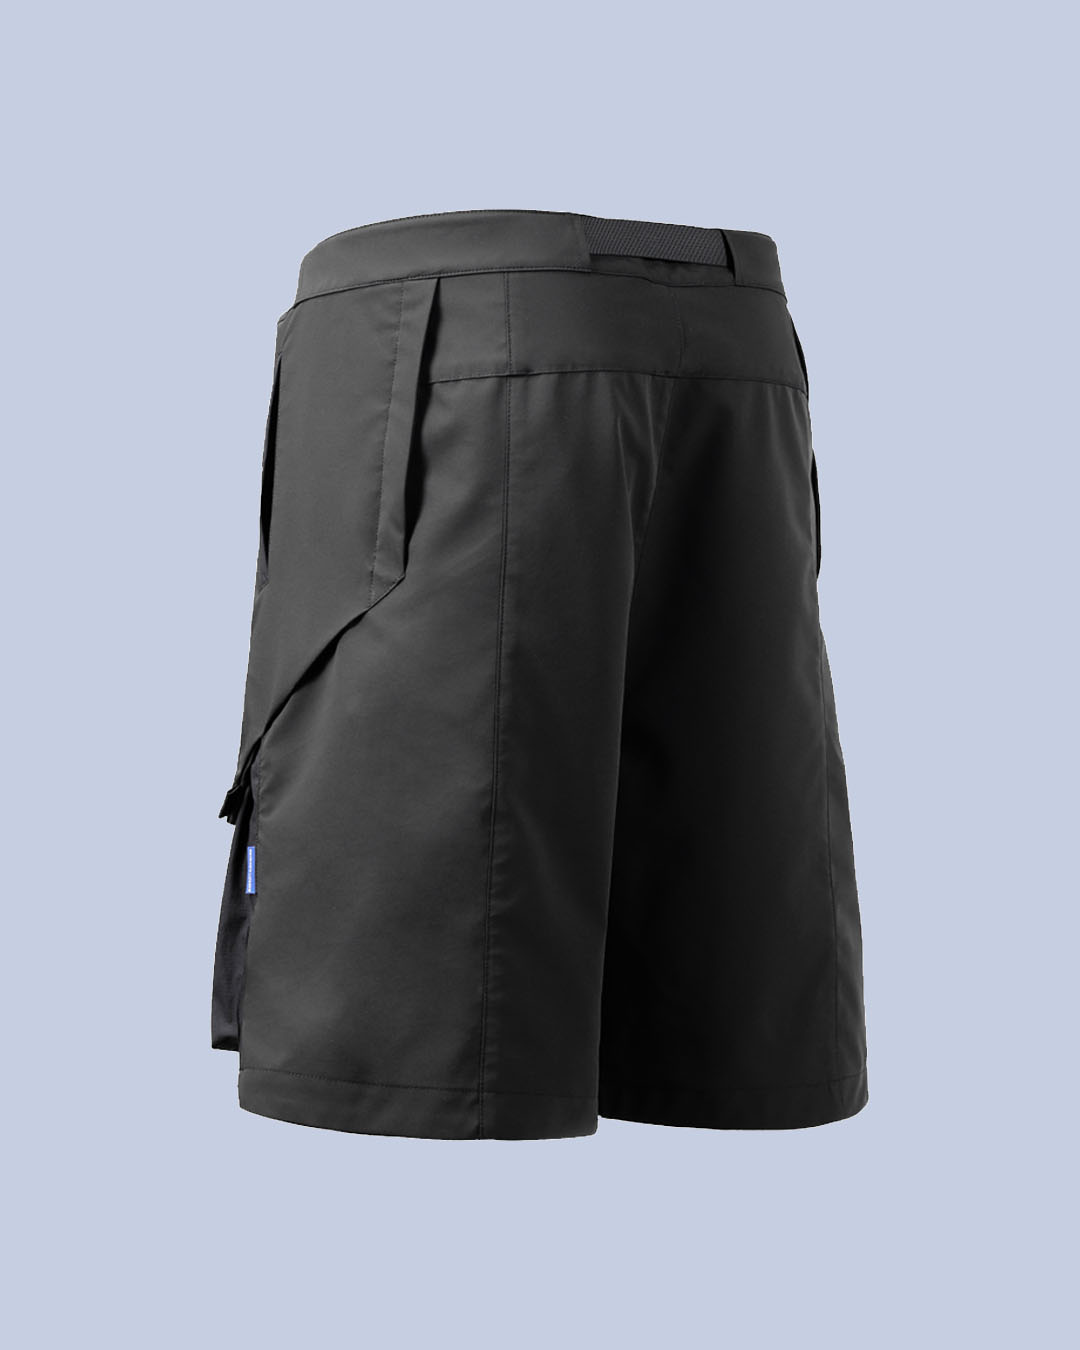 waterproof shorts